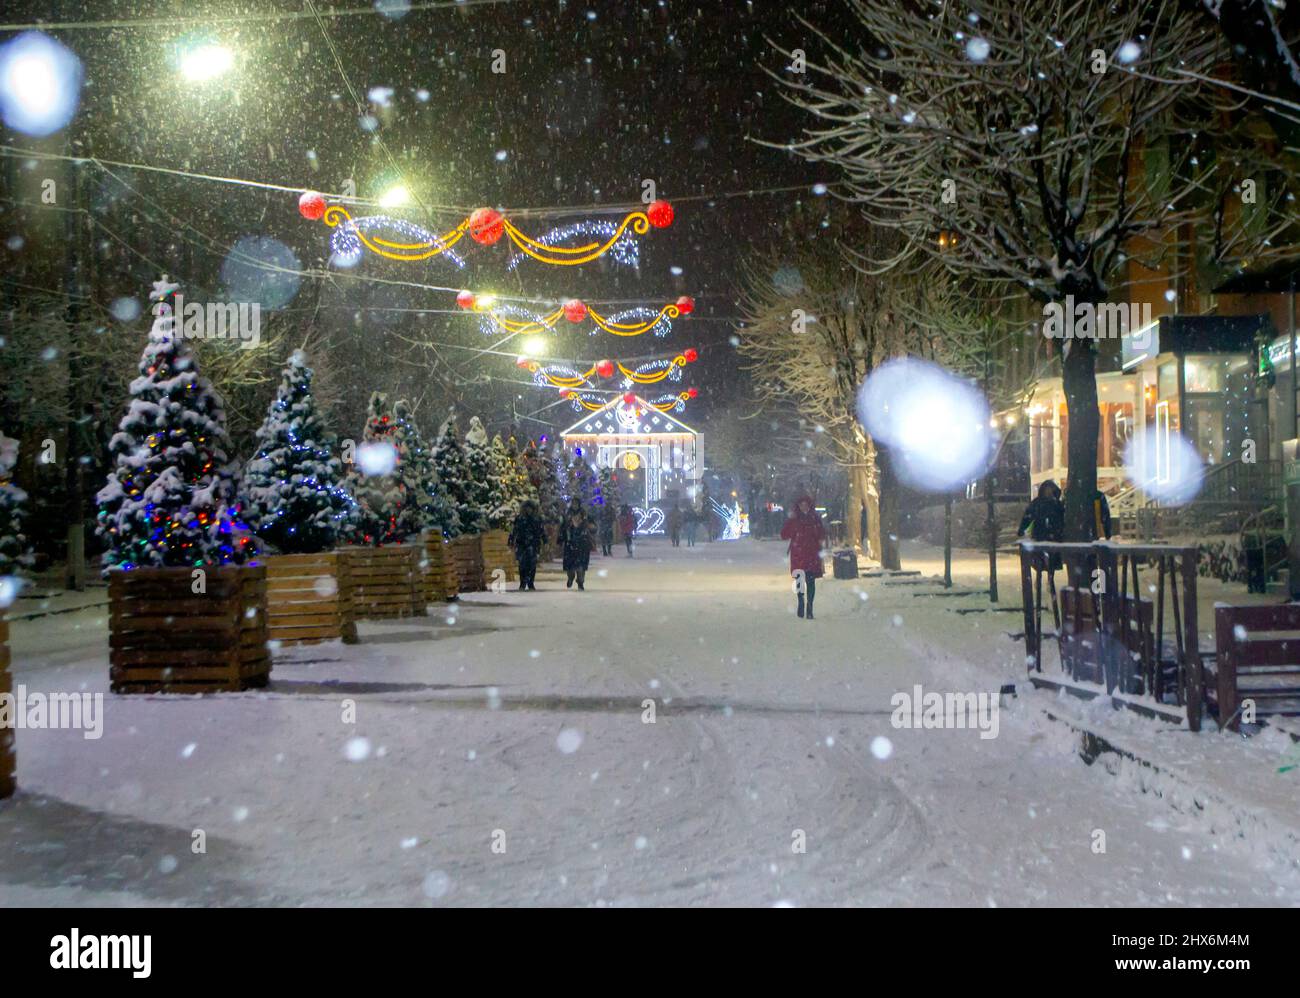 Snowy city street with Christmas trees and illumination decoration Stock Photo